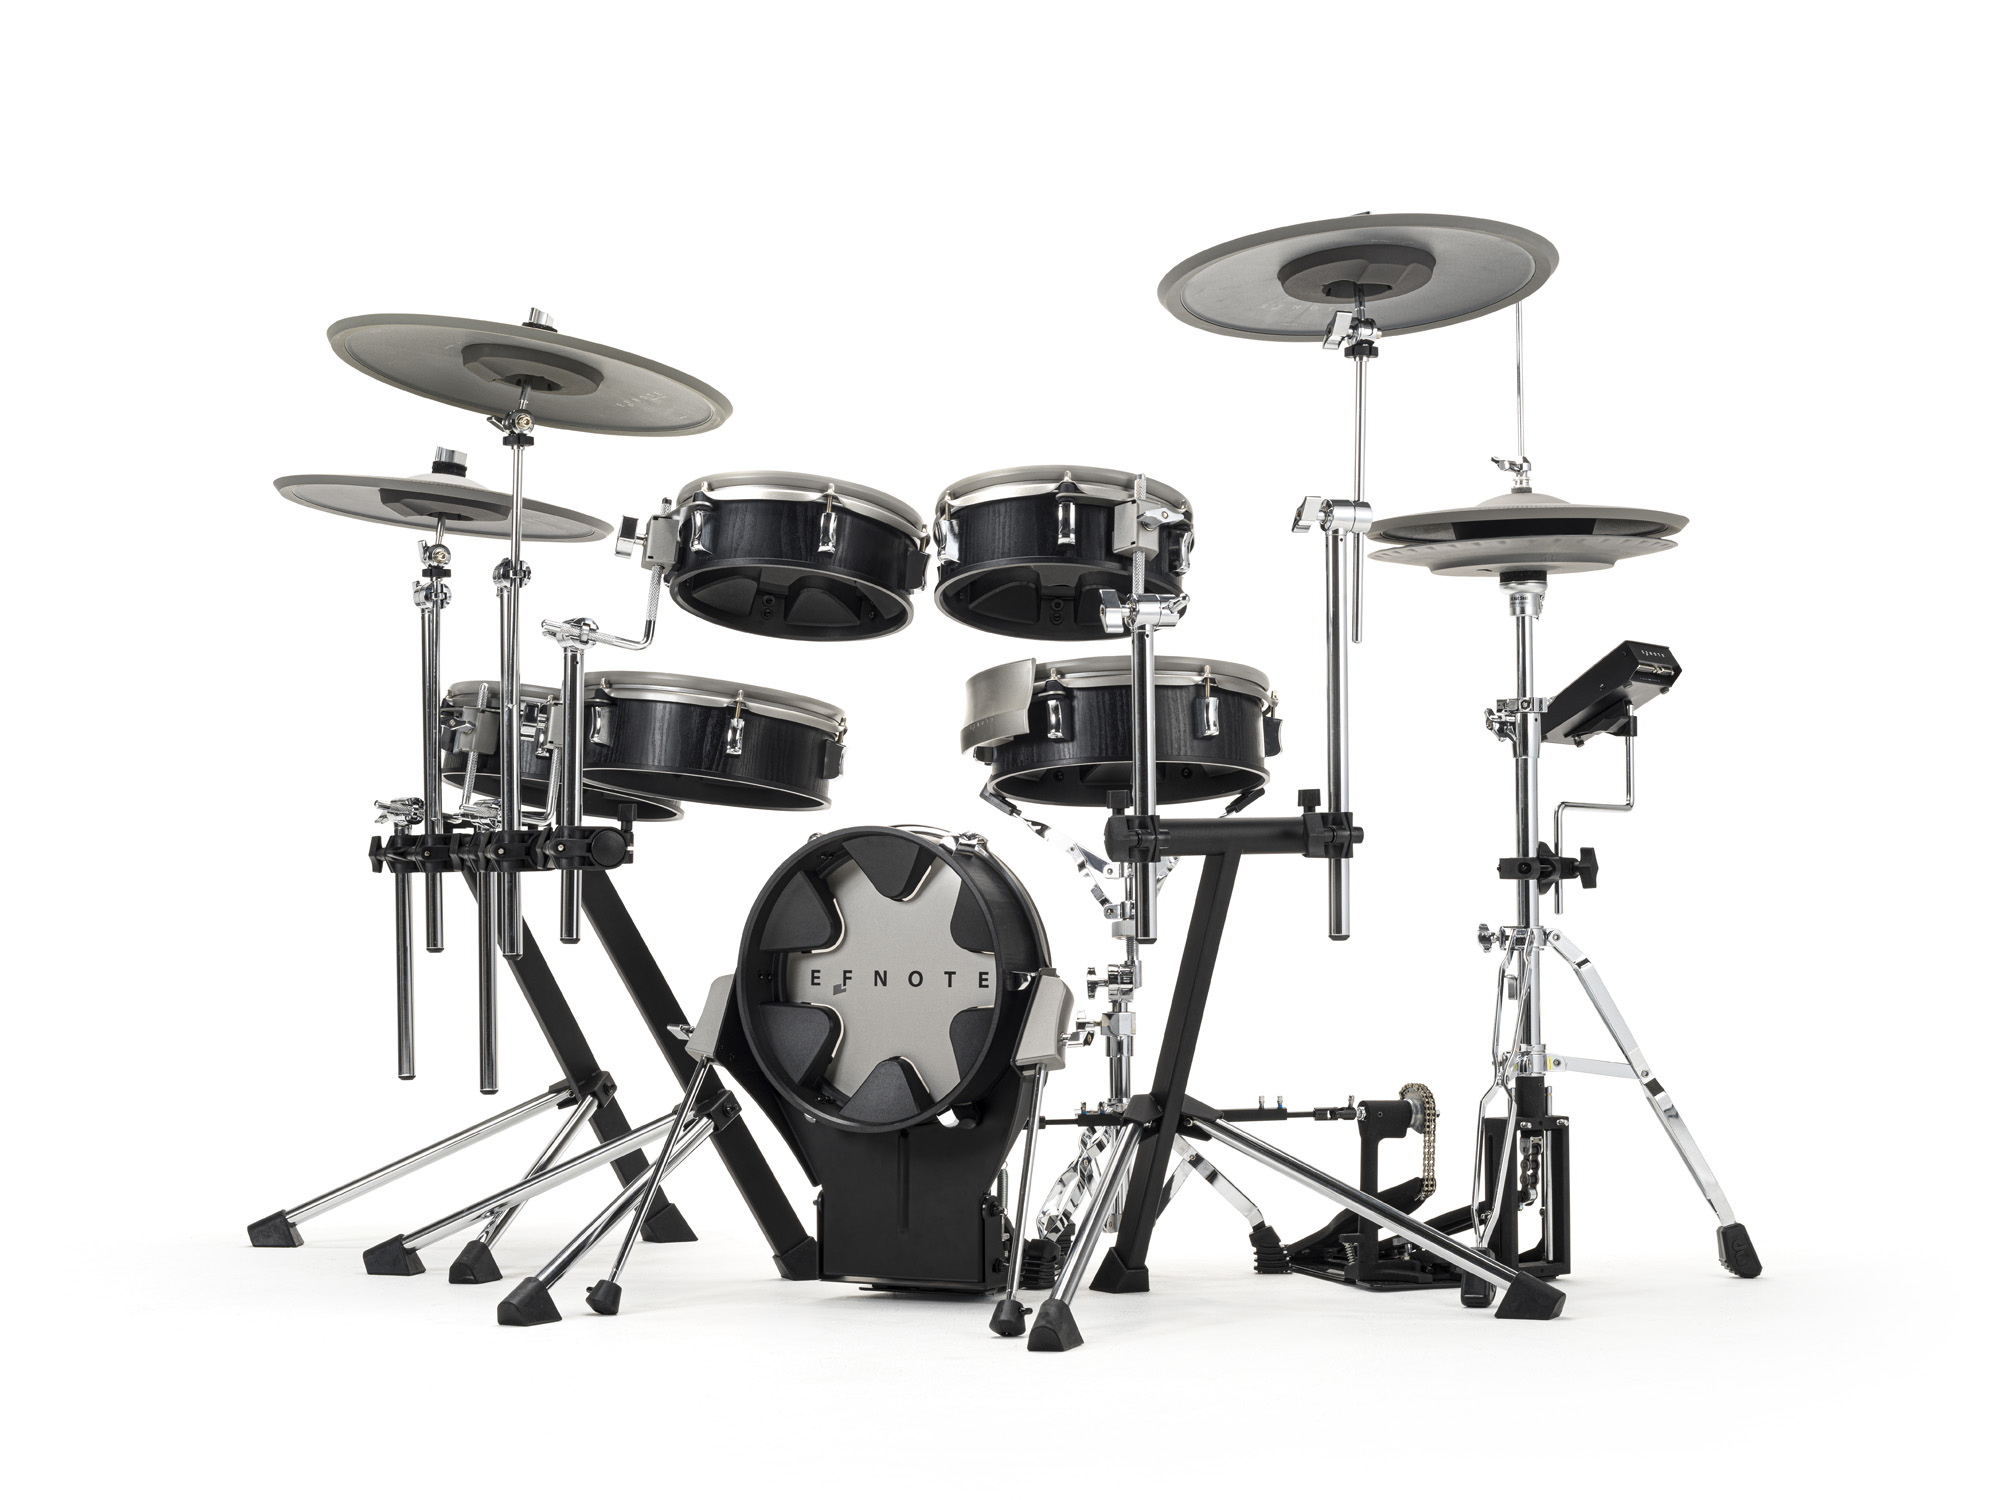 Efnote Efd3x Drum Kit - Komplett E-Drum Set - Variation 1